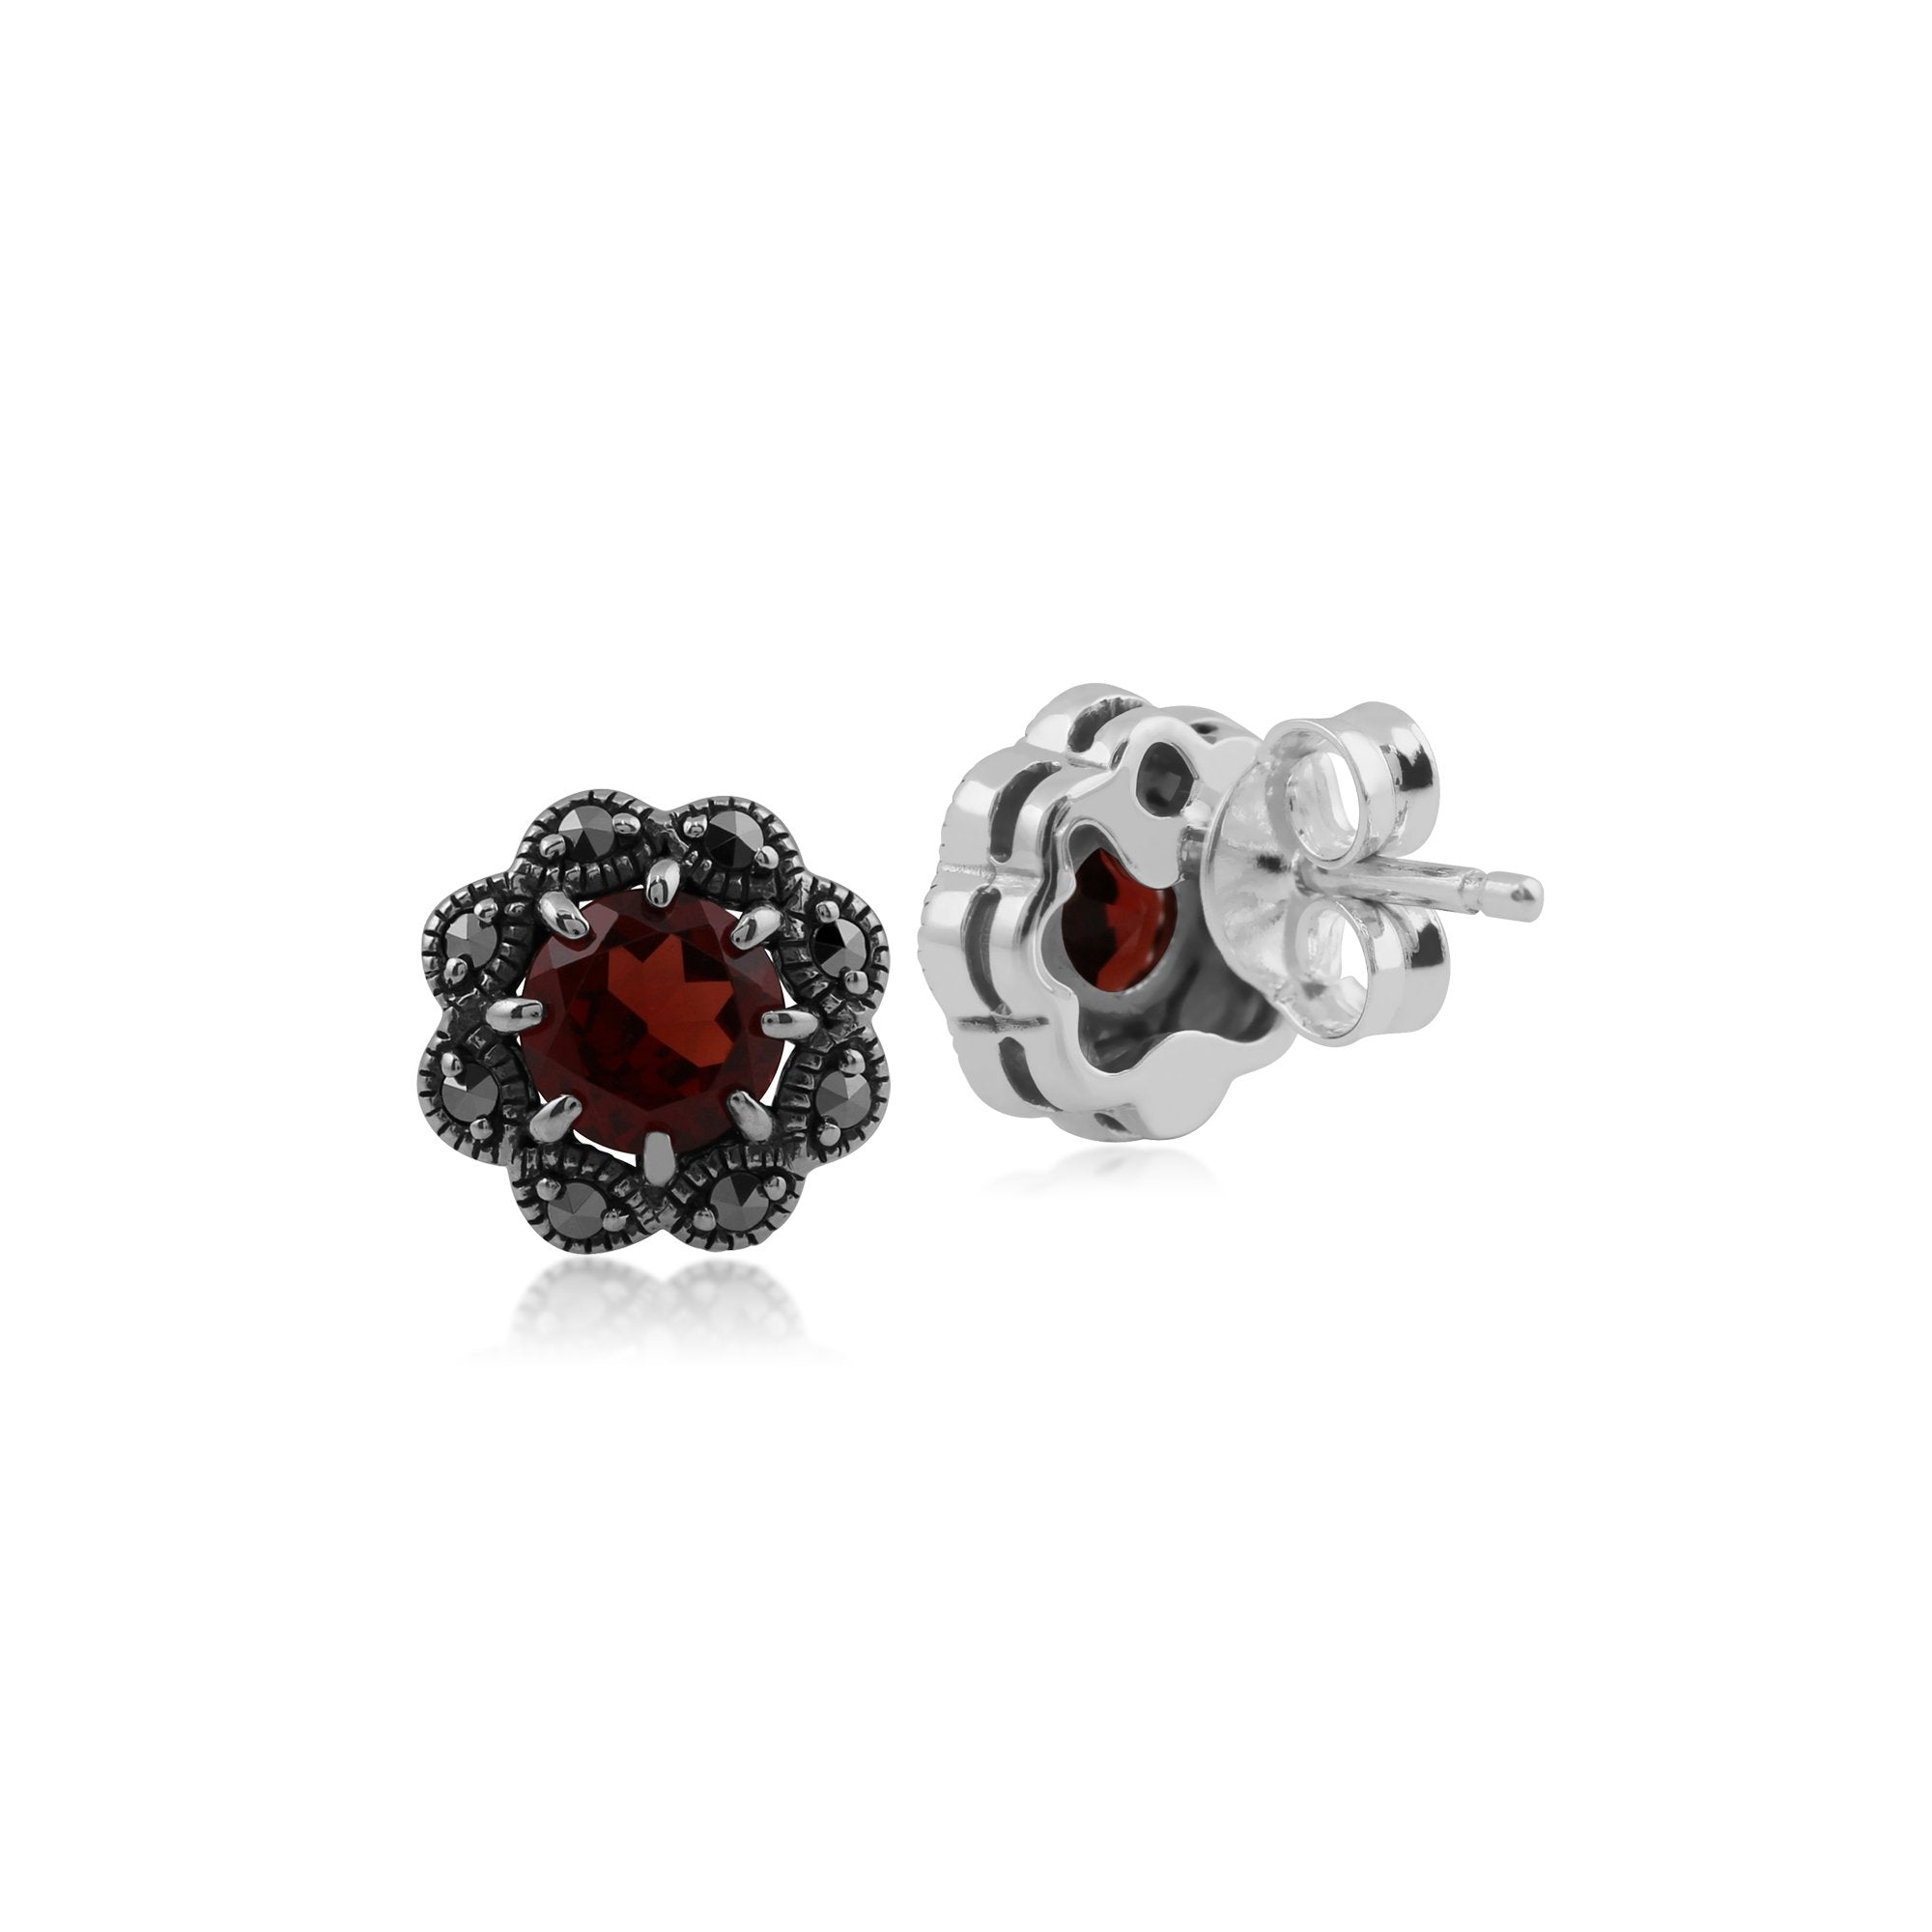 Floral Round Garnet & Marcasite Cluster Stud Earrings in 925 Sterling Silver